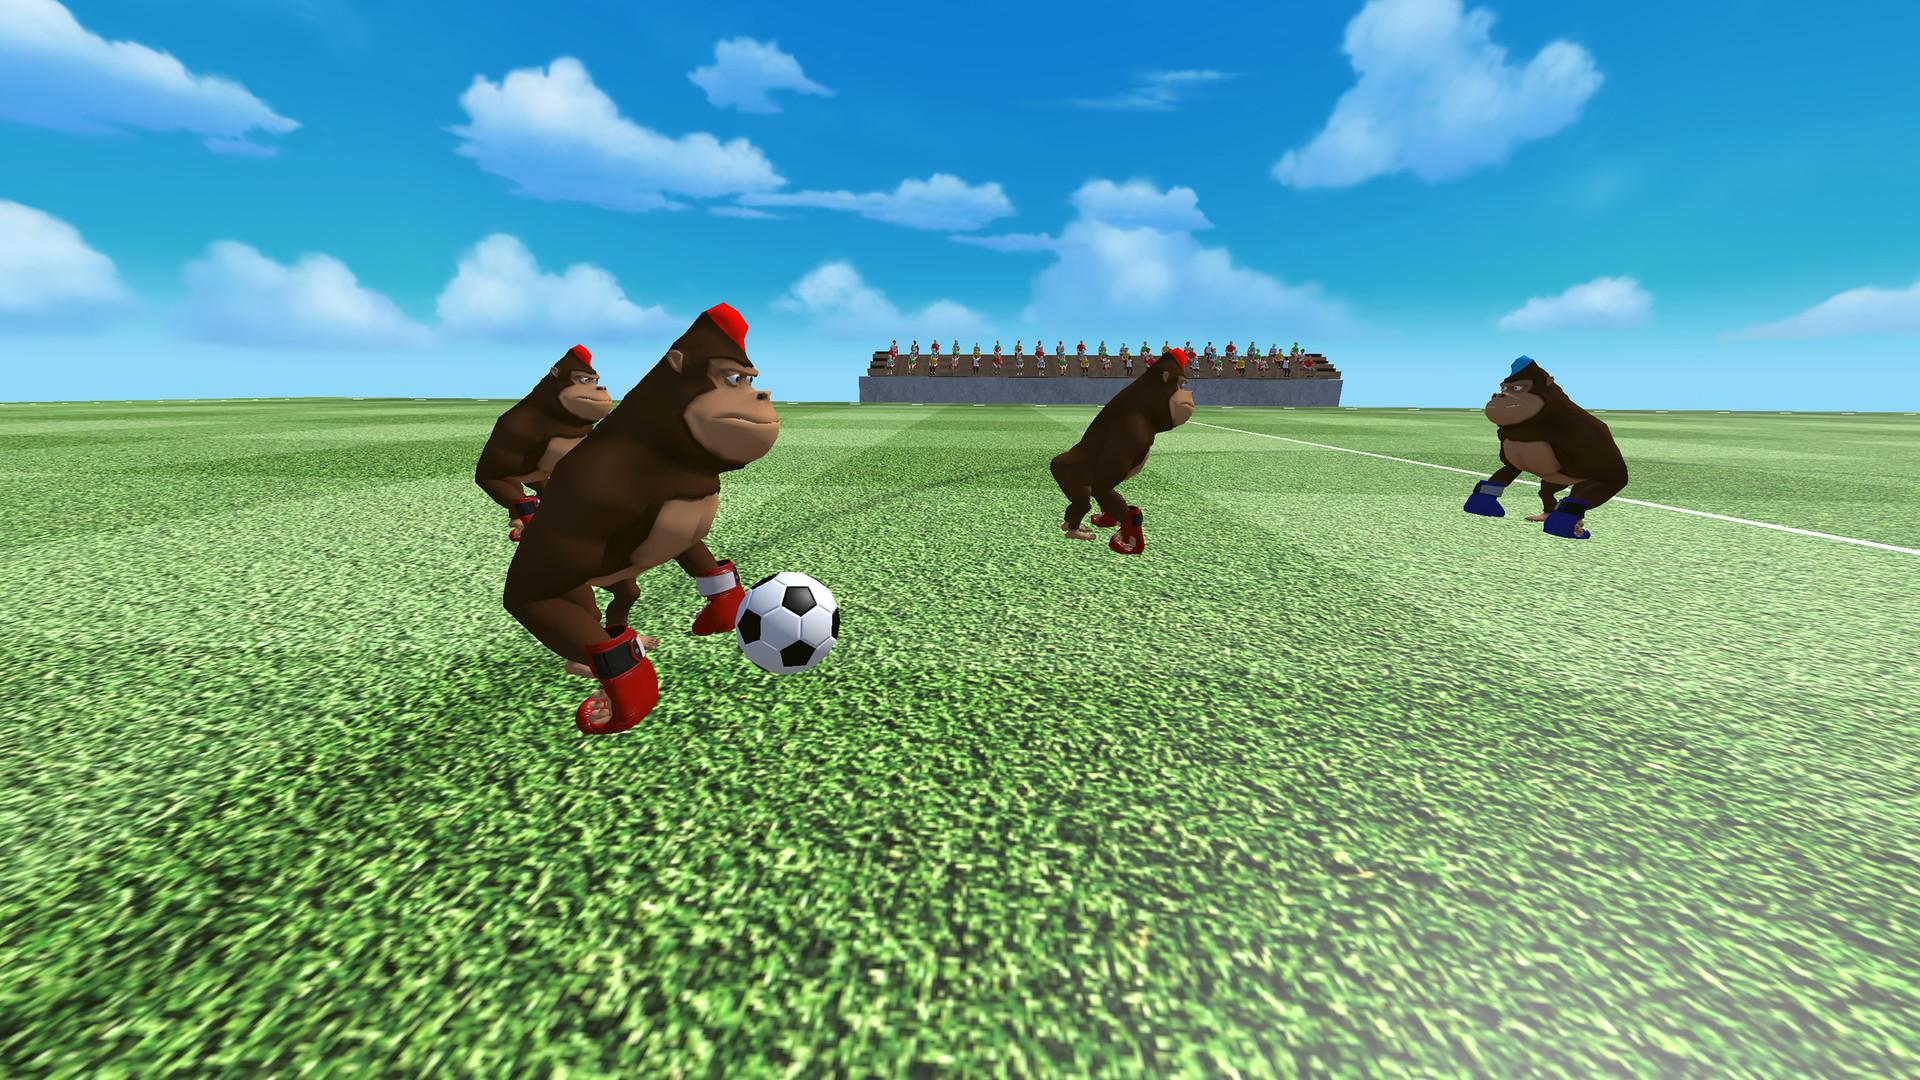 Gorilla Soccer Oculus Quest VR Game for Free